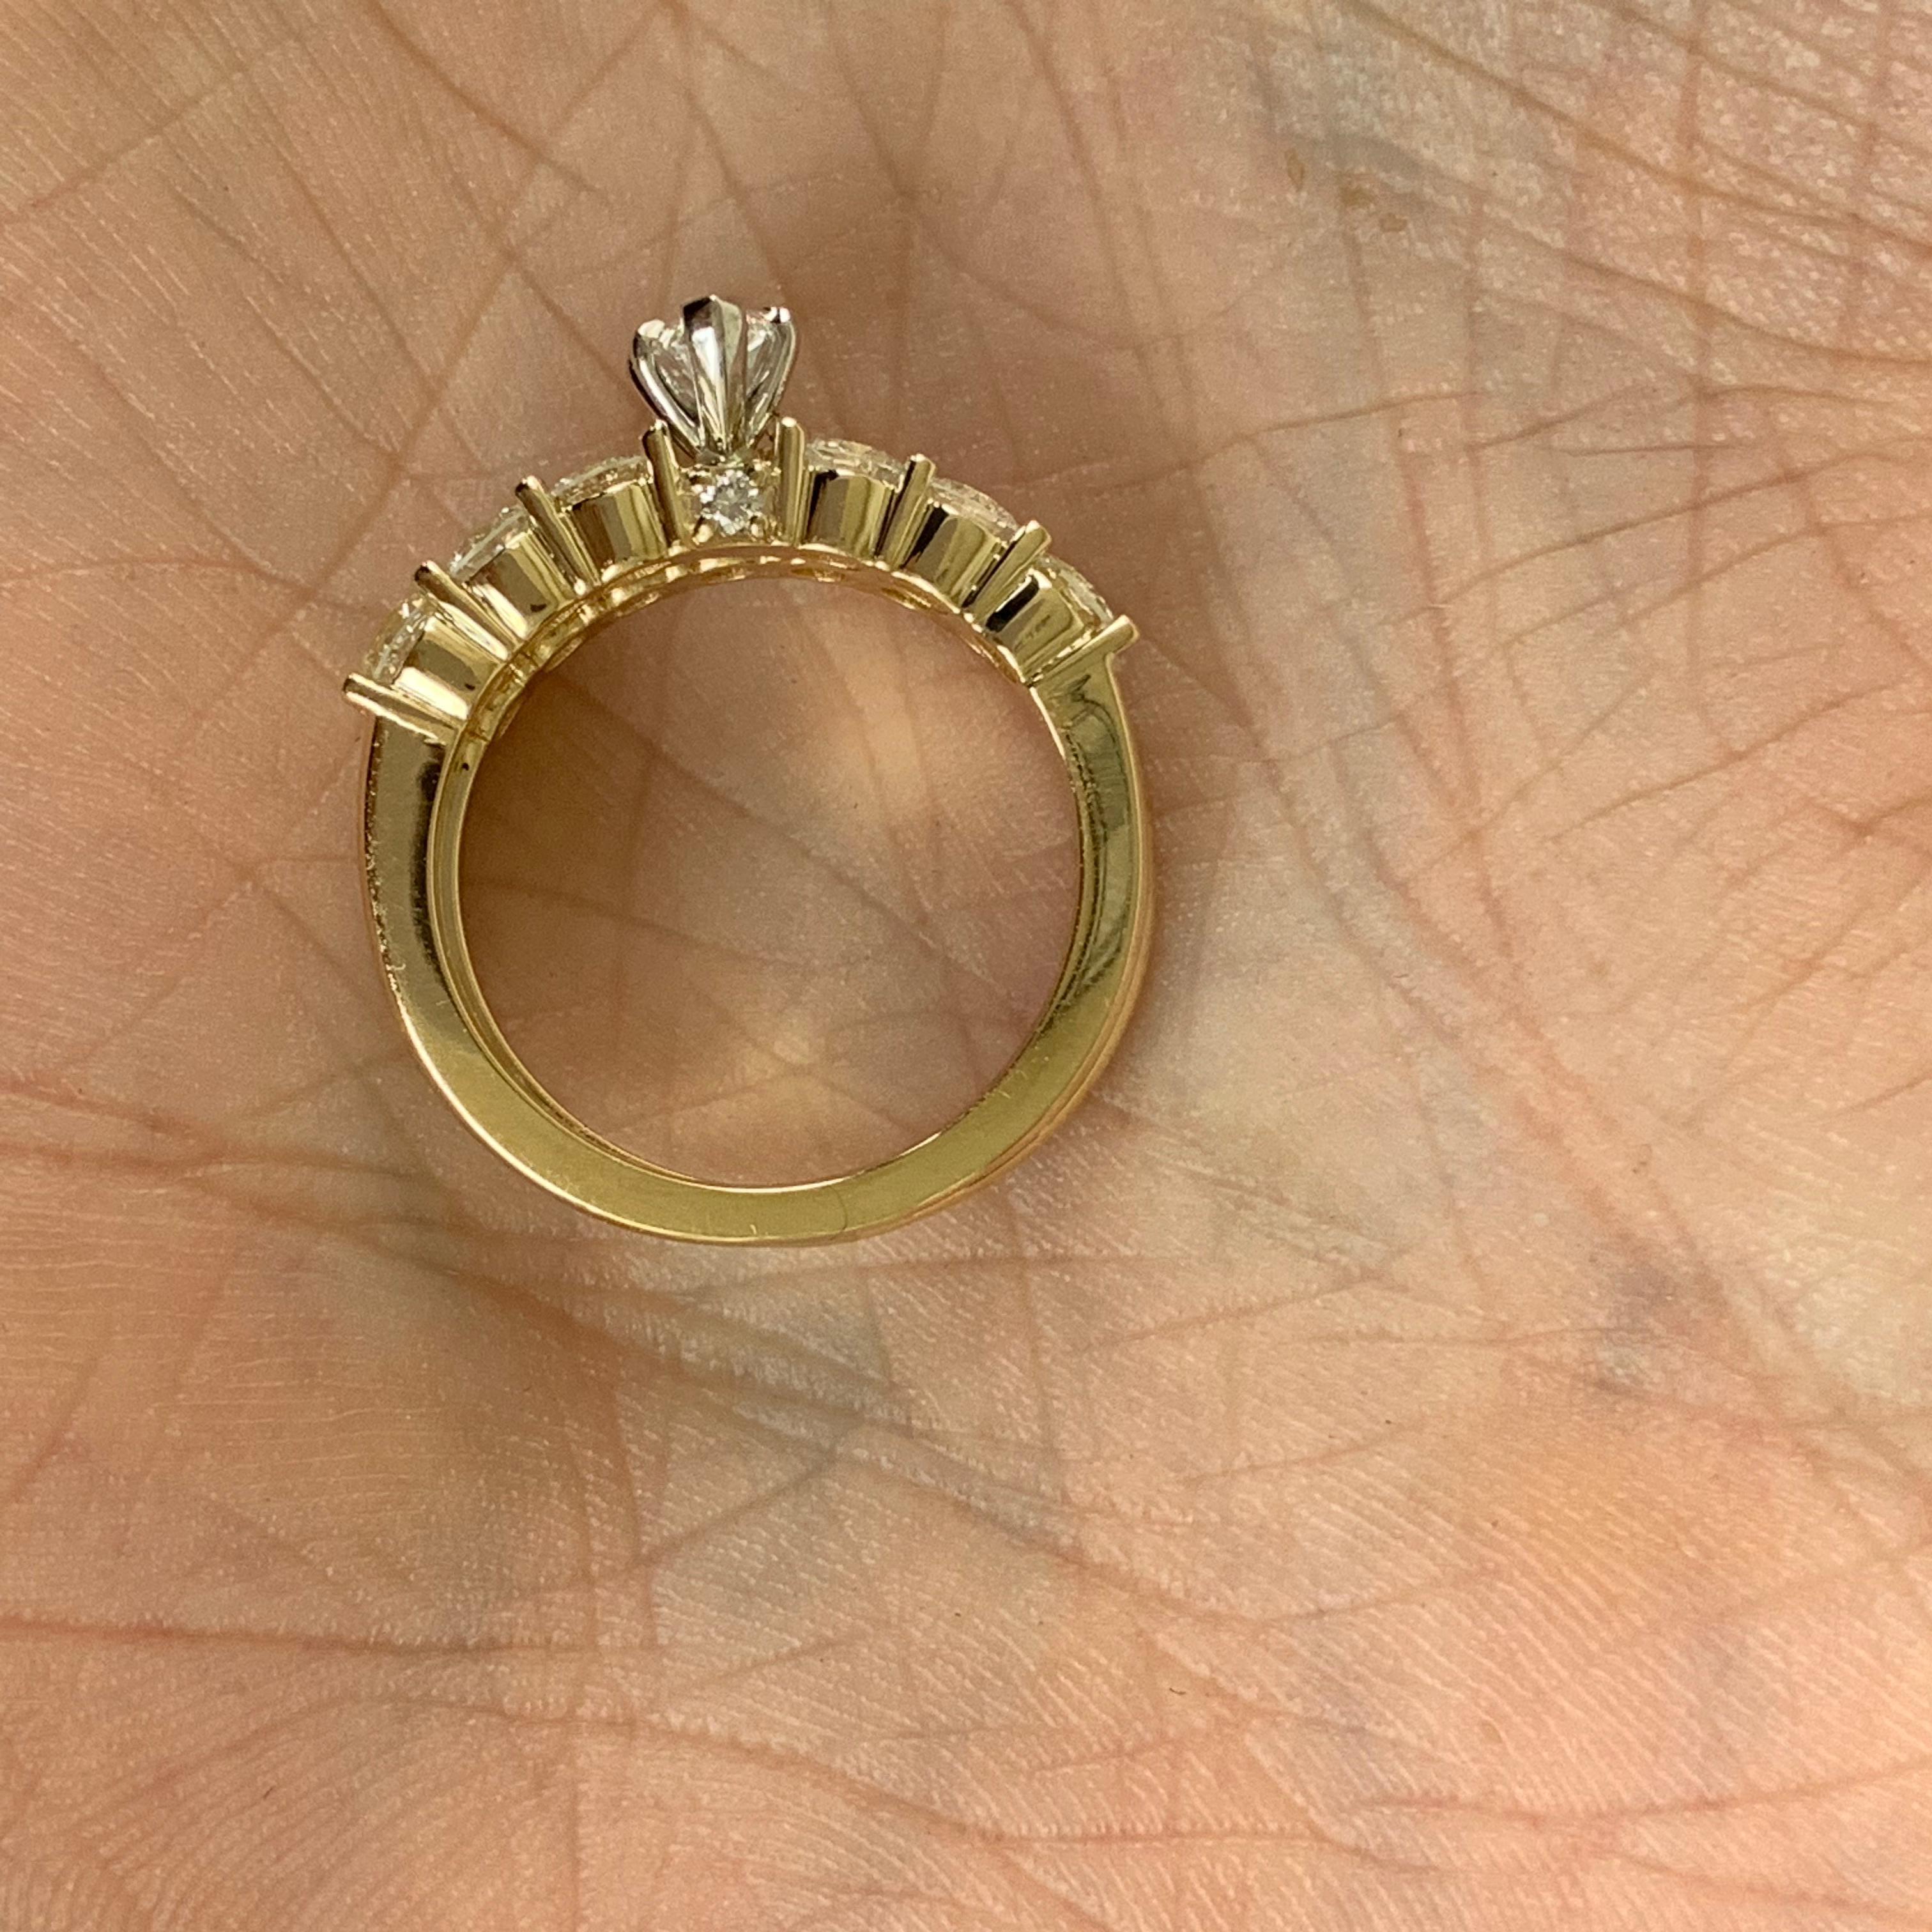 marquise diamond wedding ring